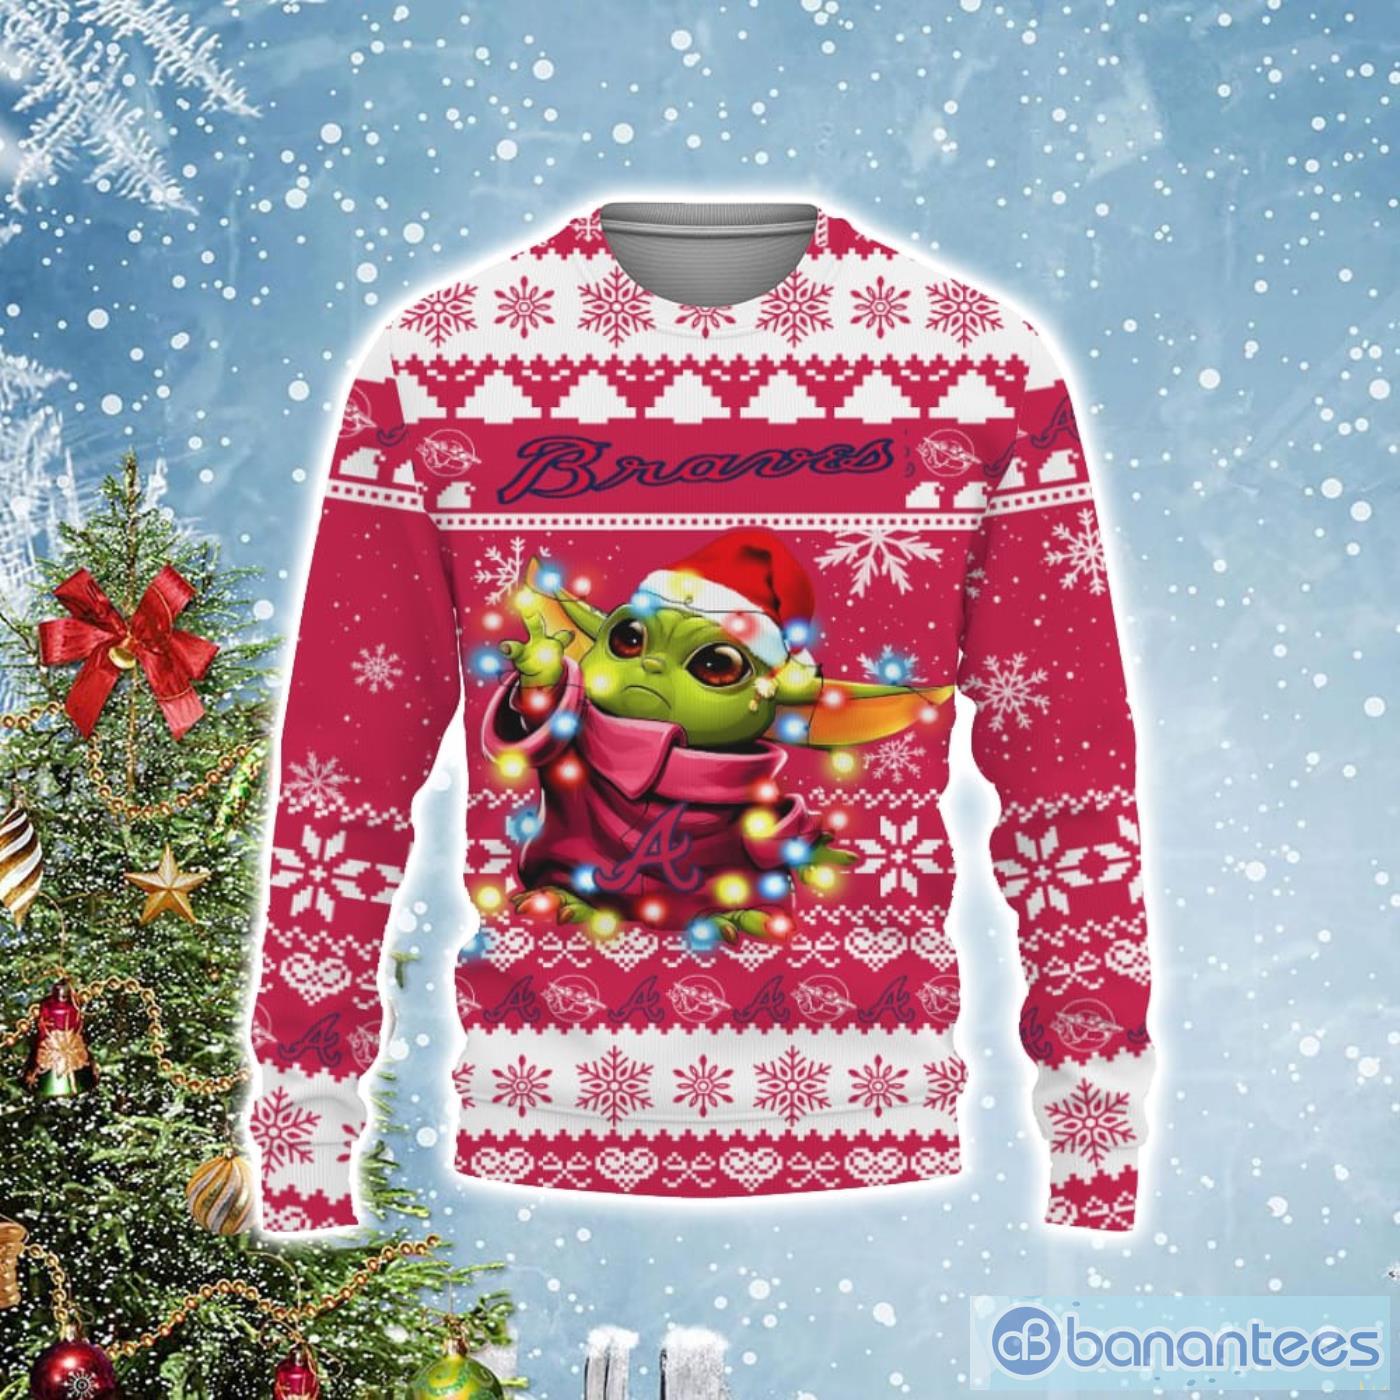 Atlanta Braves Baby Yoda Star Wars Ugly Christmas Sweater Product Photo 1